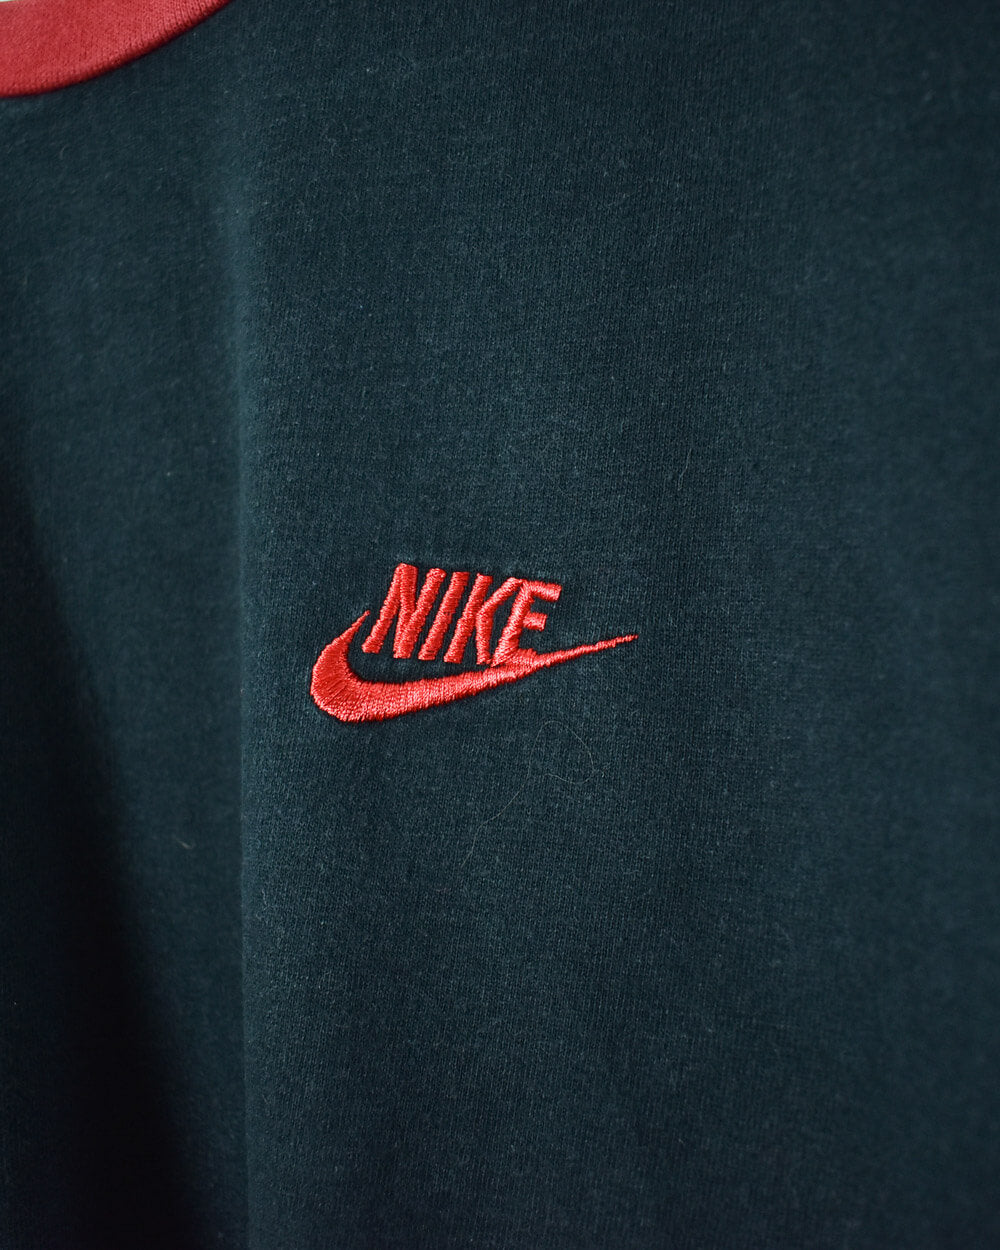 Black Nike Long Sleeved T-Shirt - Medium